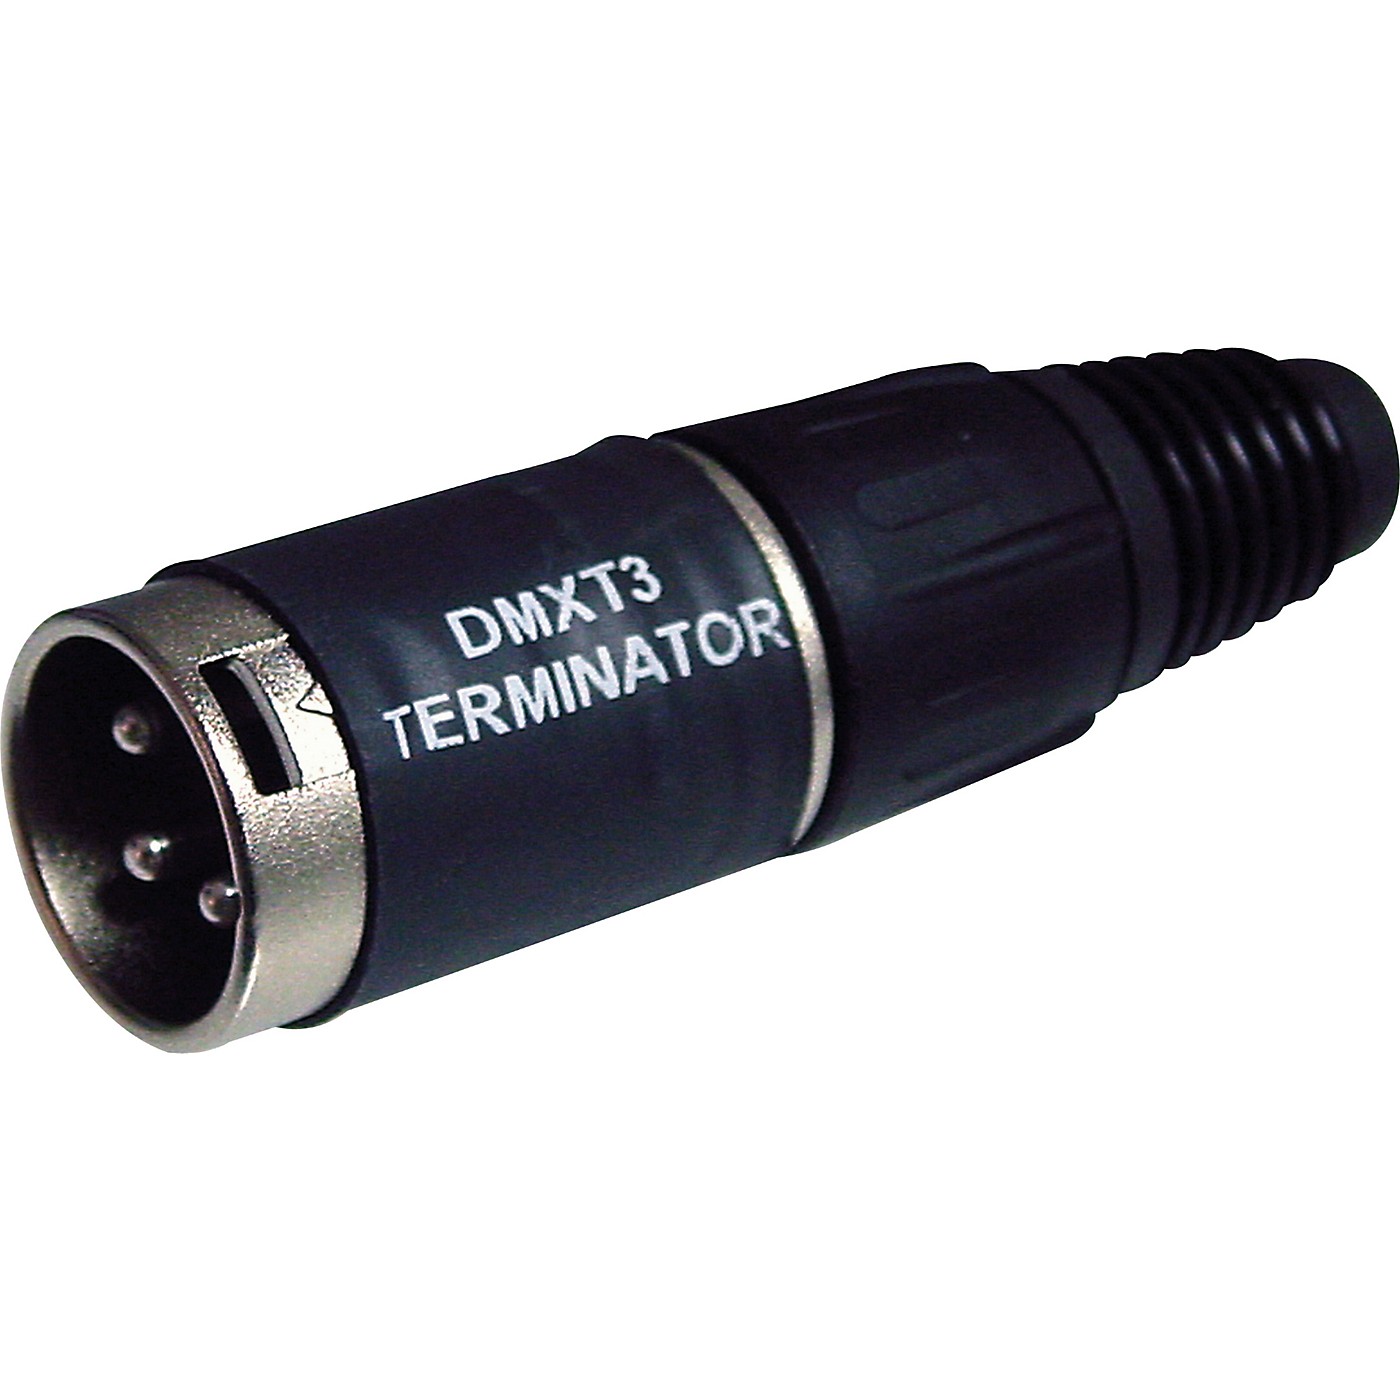 VTG 3-Pin DMX Terminator thumbnail